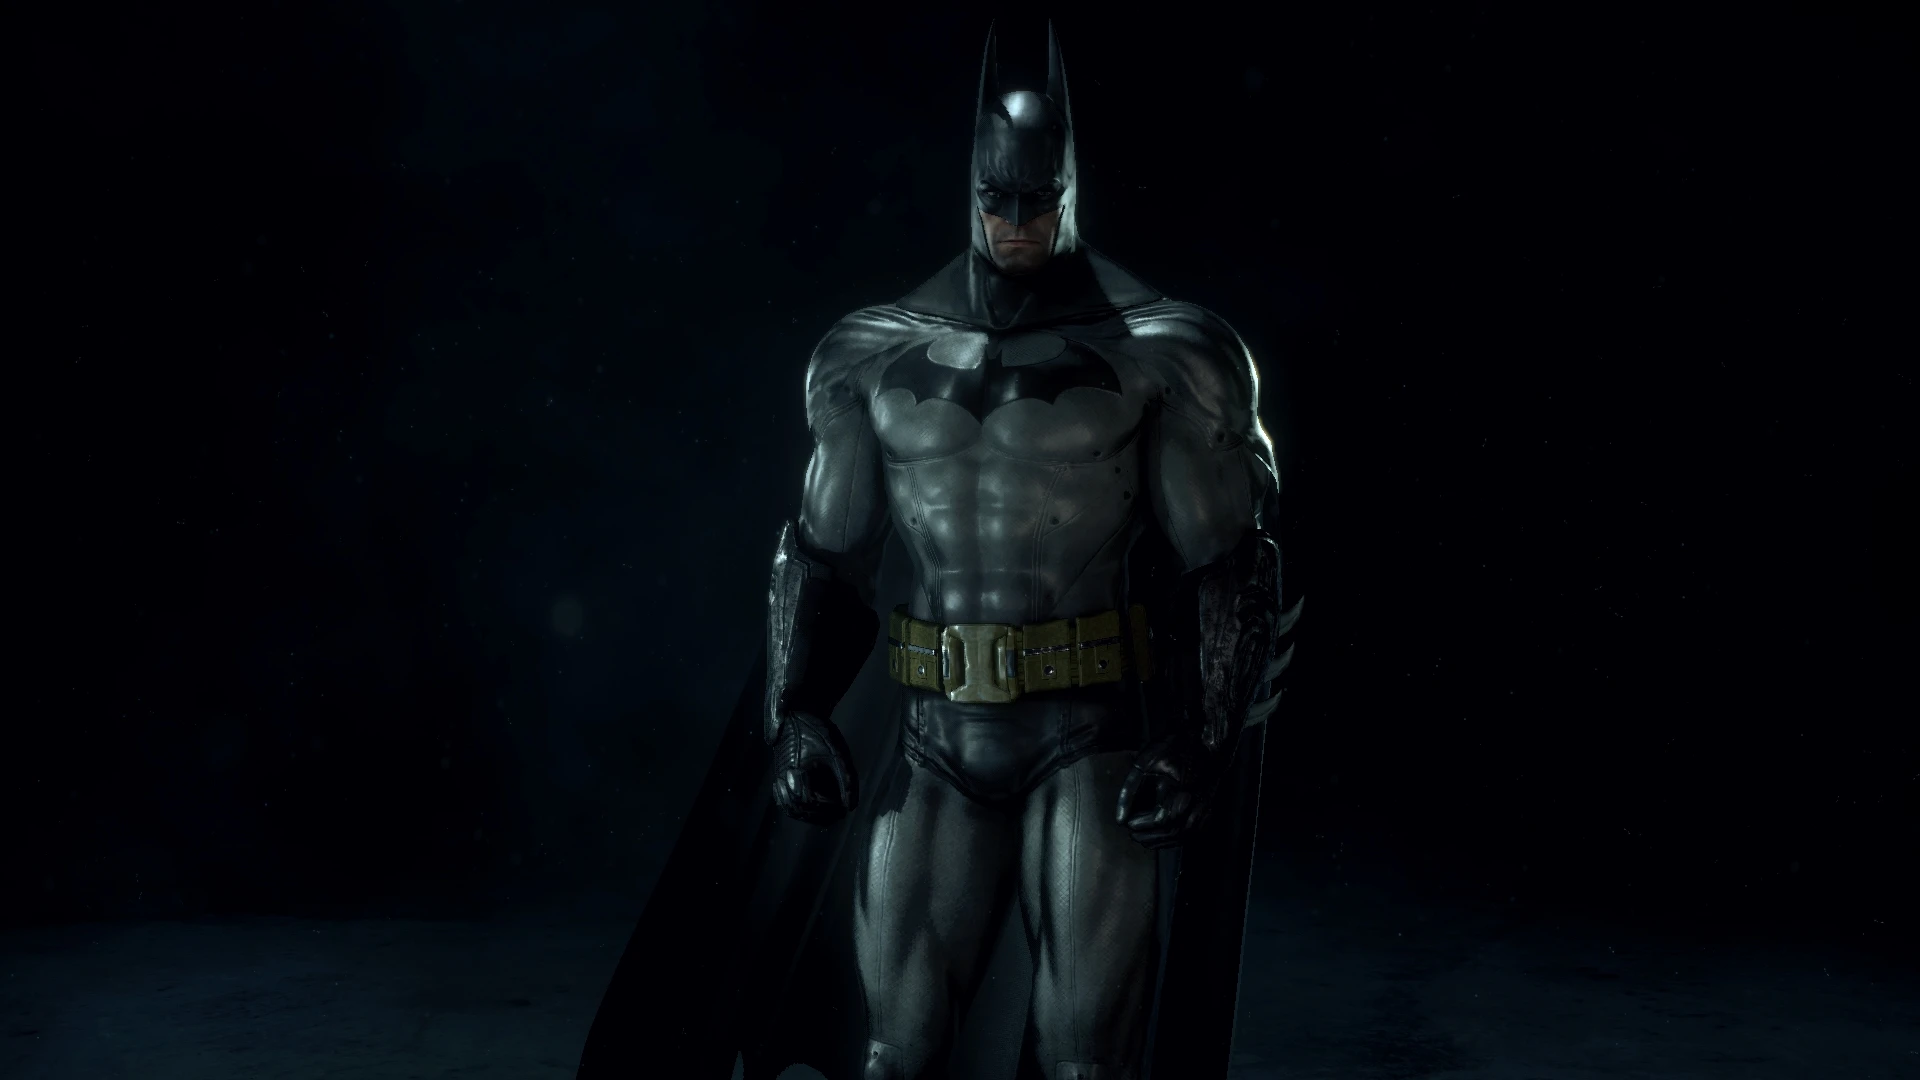 Nexus batman. Batman Arkham Knight Batsuit. Бэткостюм Бэтмен Аркхем кнайт. Batman Arkham Asylum Batsuit. Batman Arkham Knight Бэткостюм v8.05.